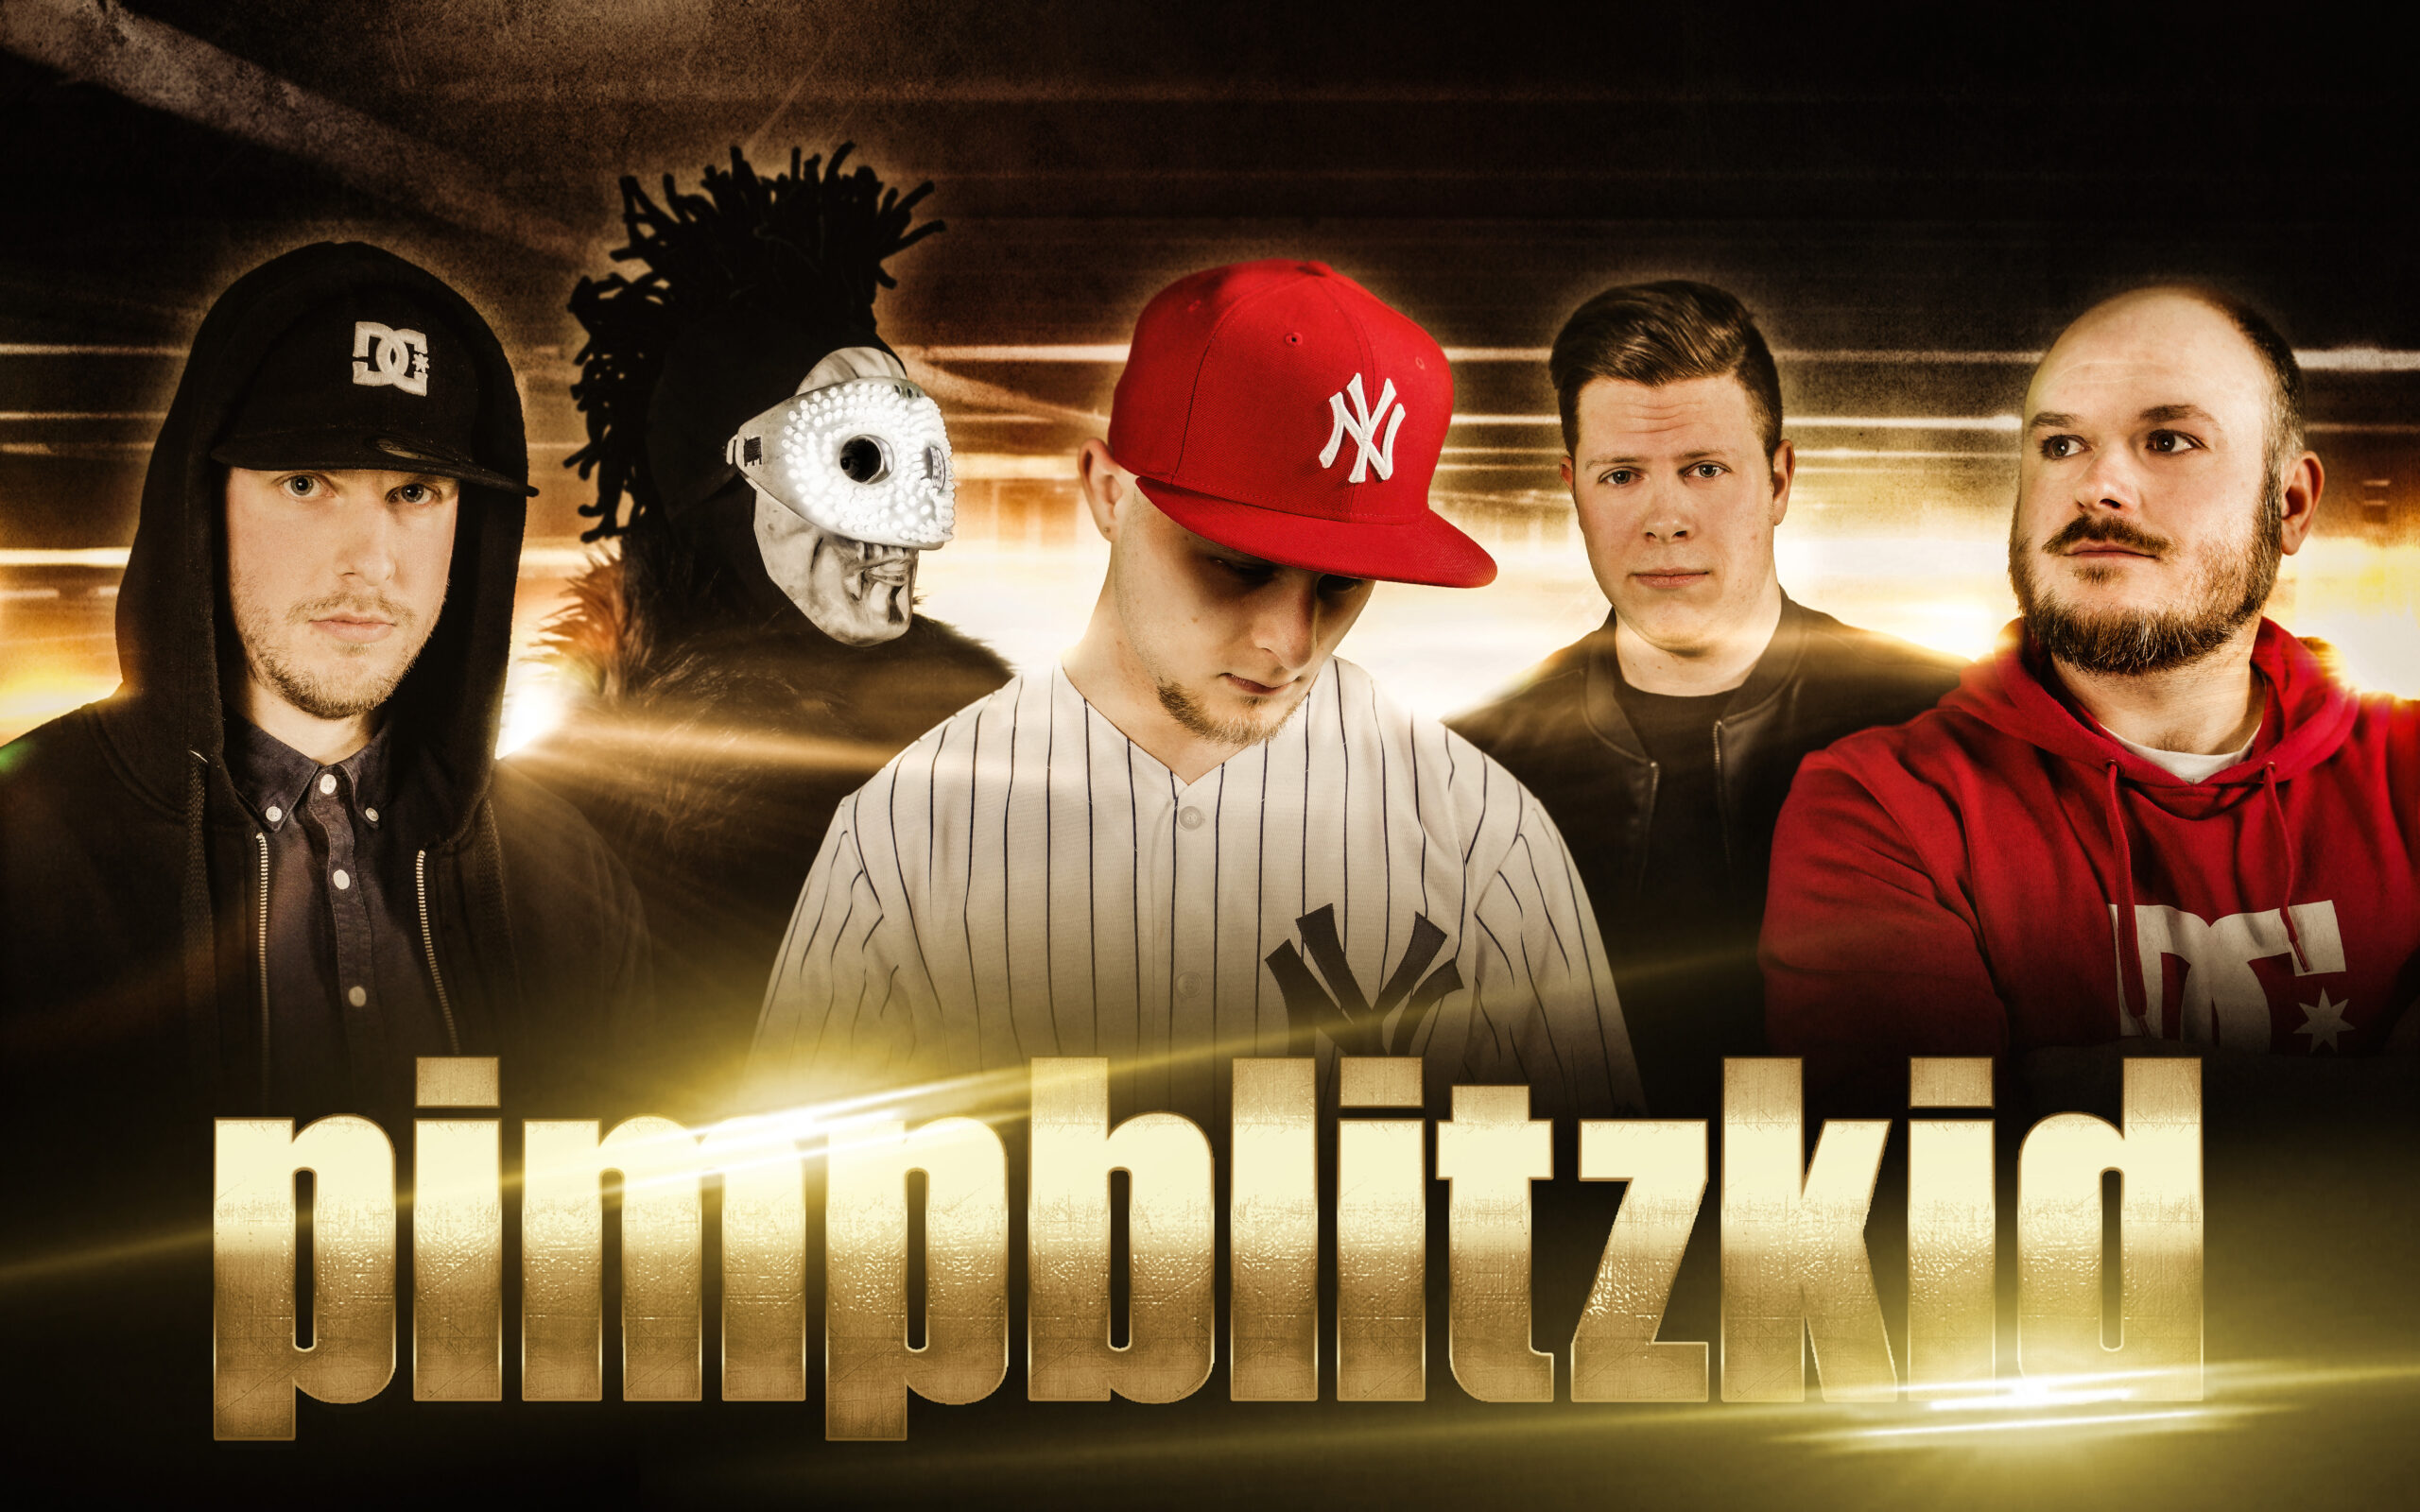 Pimp Blitzkid - Tribute to Limp Bizkit